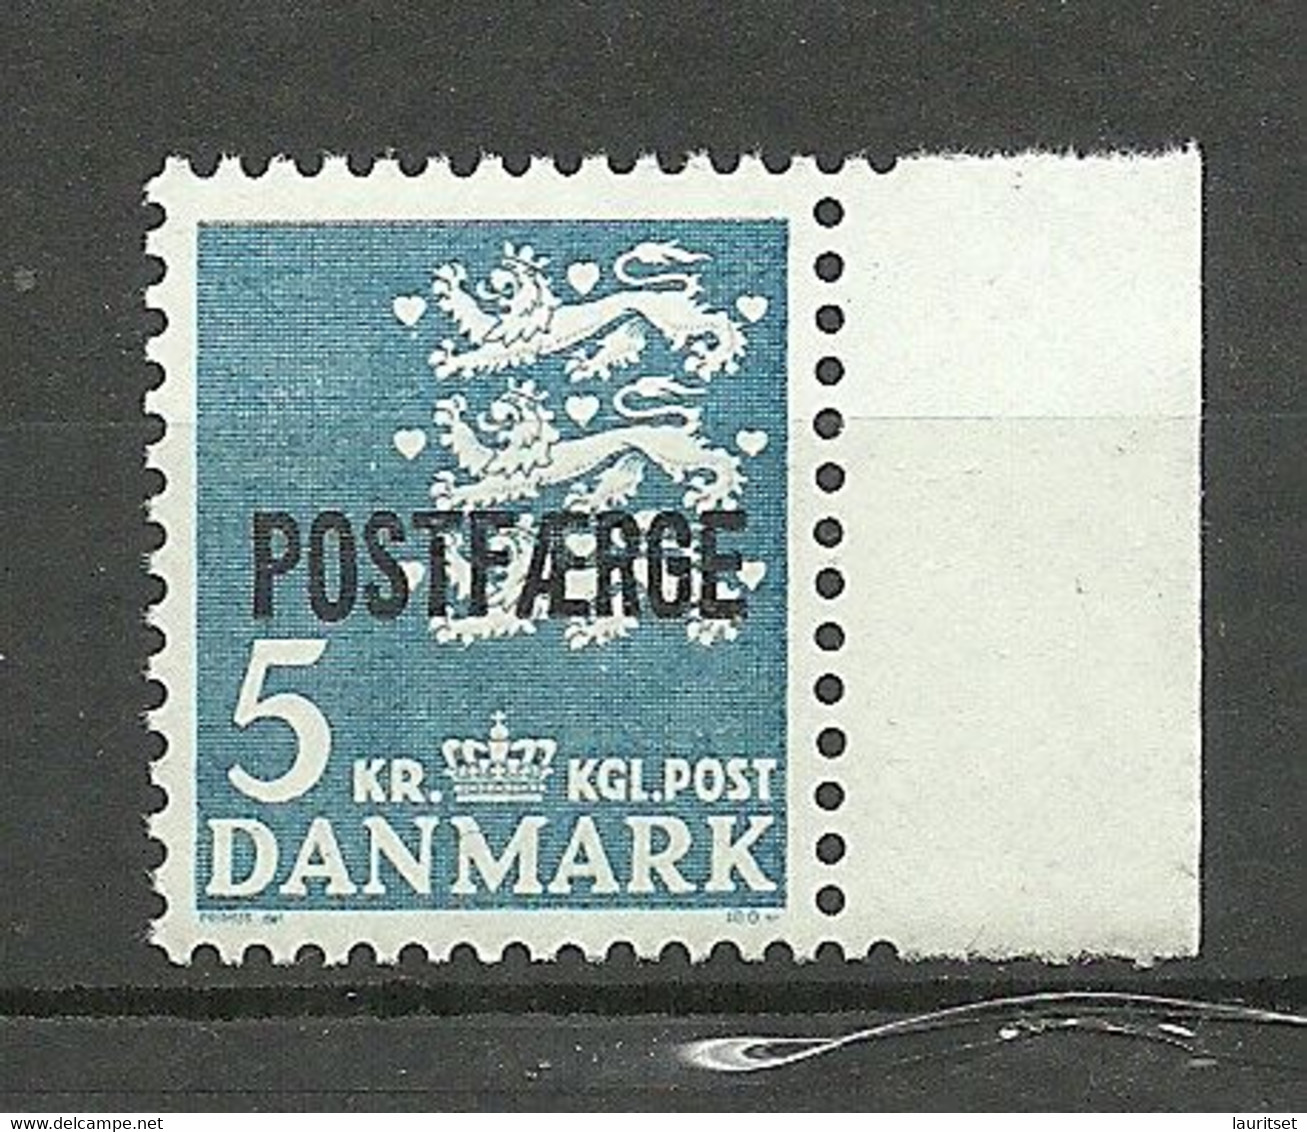 DENMARK Dänemark 1972 Michel 44 MNH Postfähre Paketmarke - Parcel Post